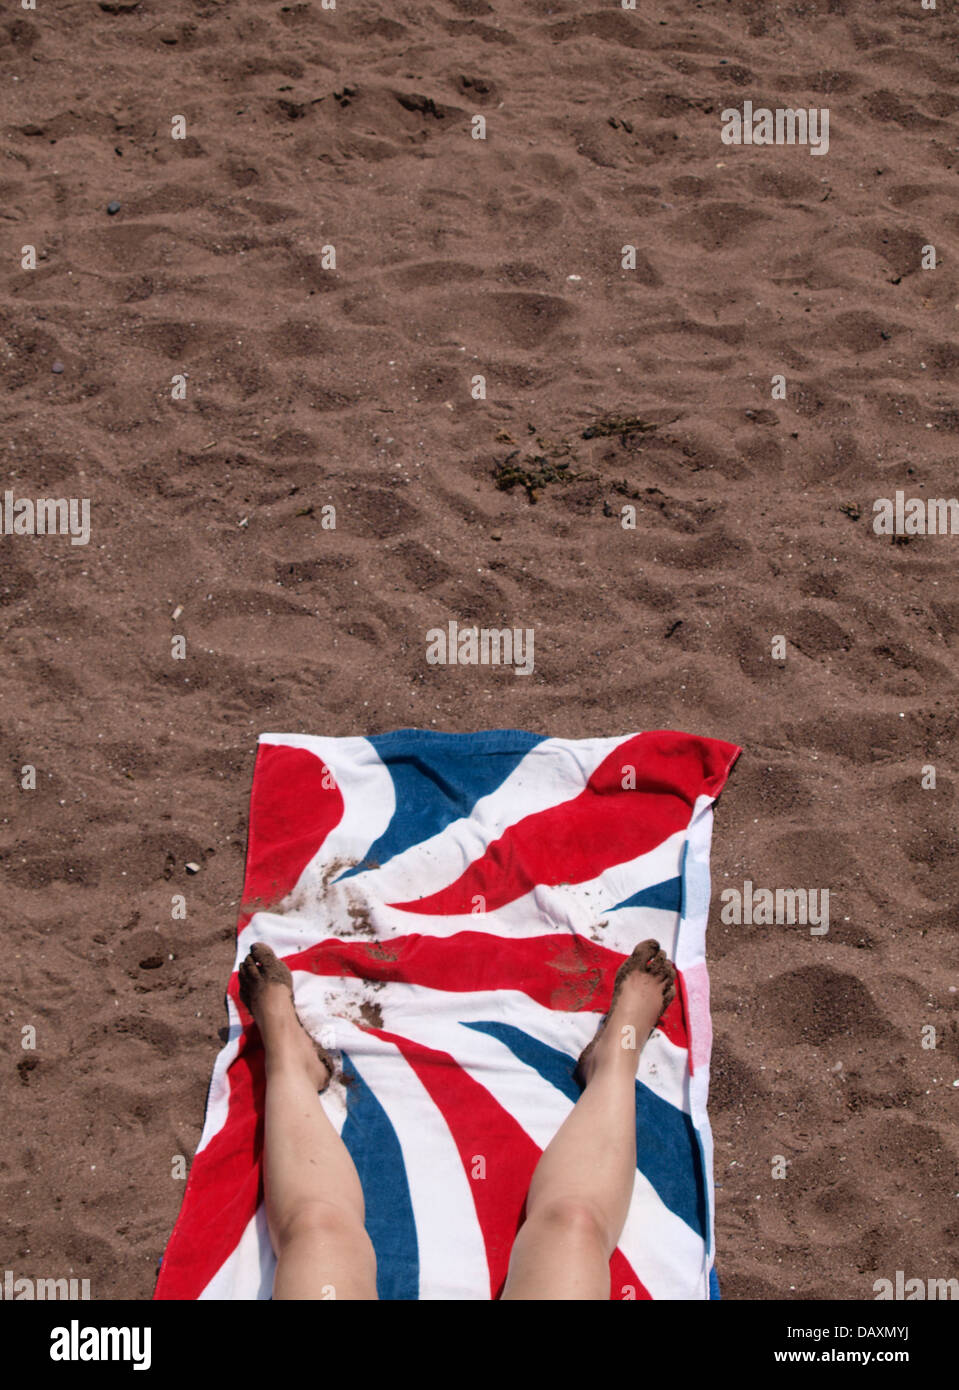 Legs of a woman sunbathing on Union Jack flag towel, UK 2013 Stock Photo